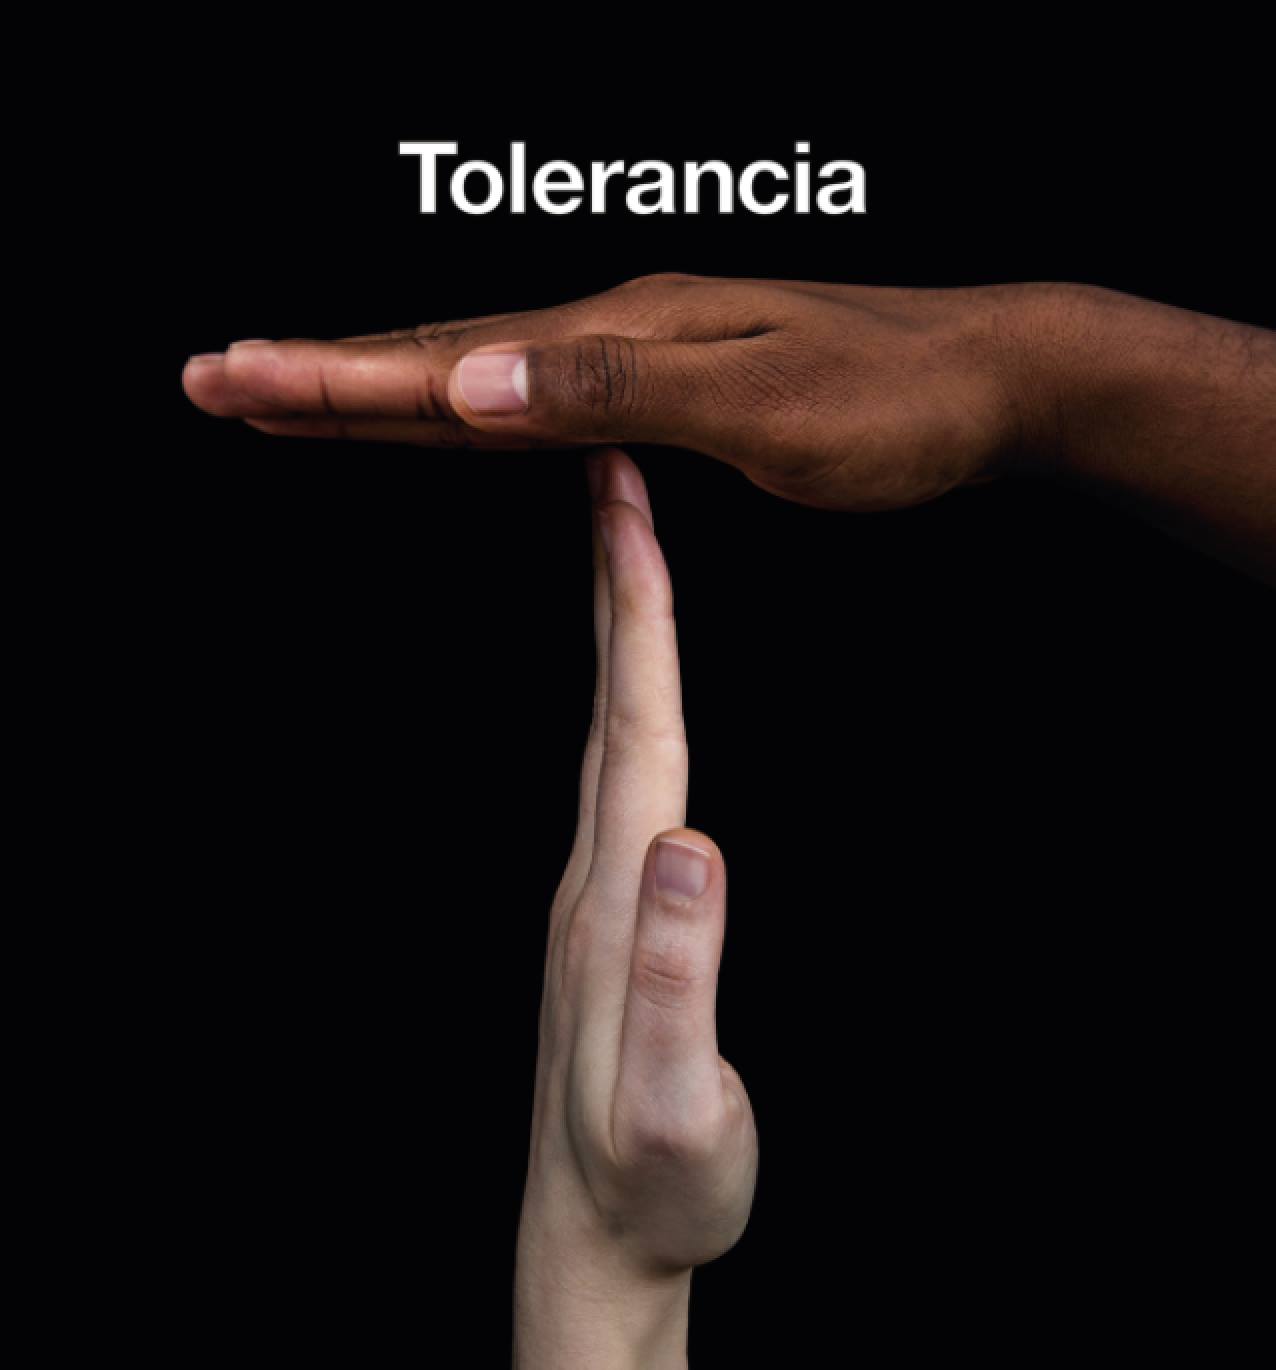 Tolerance Poster Show in Dubrovnik